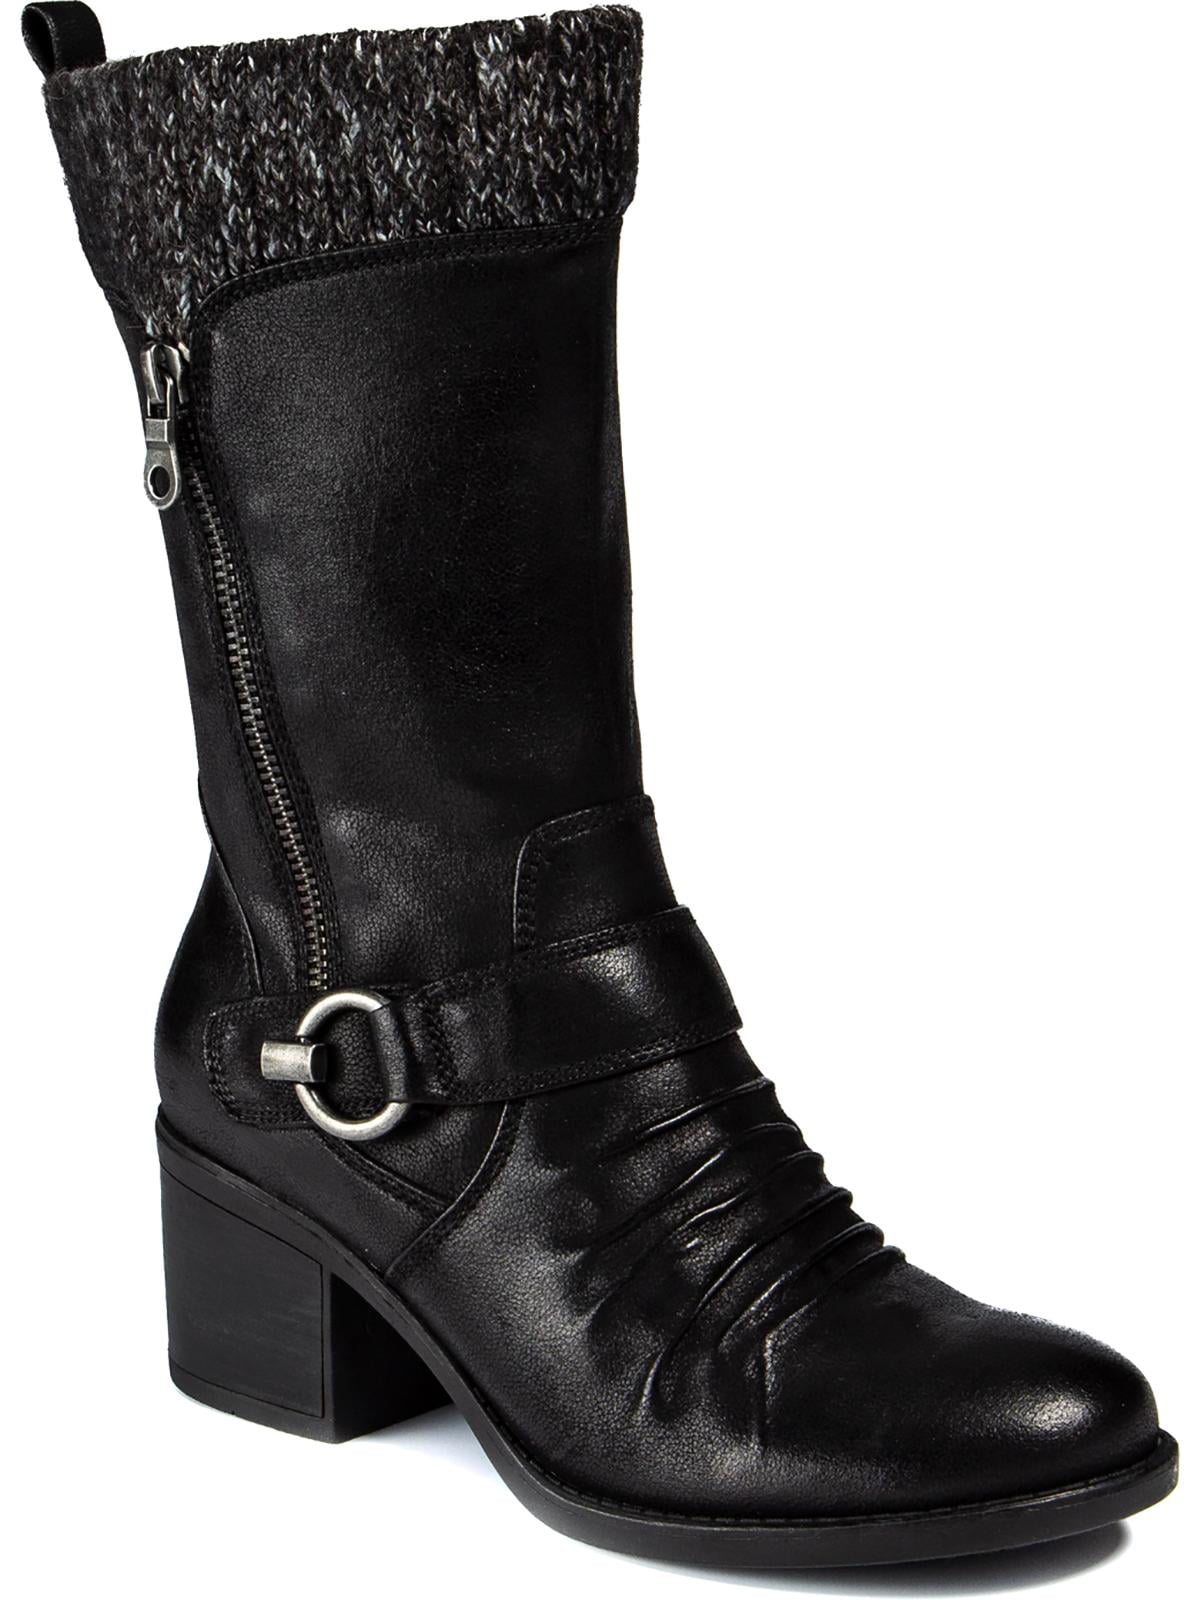 Bare Traps Womens Wylla Leather Closed Toe Mid-Calf Fashion Boots